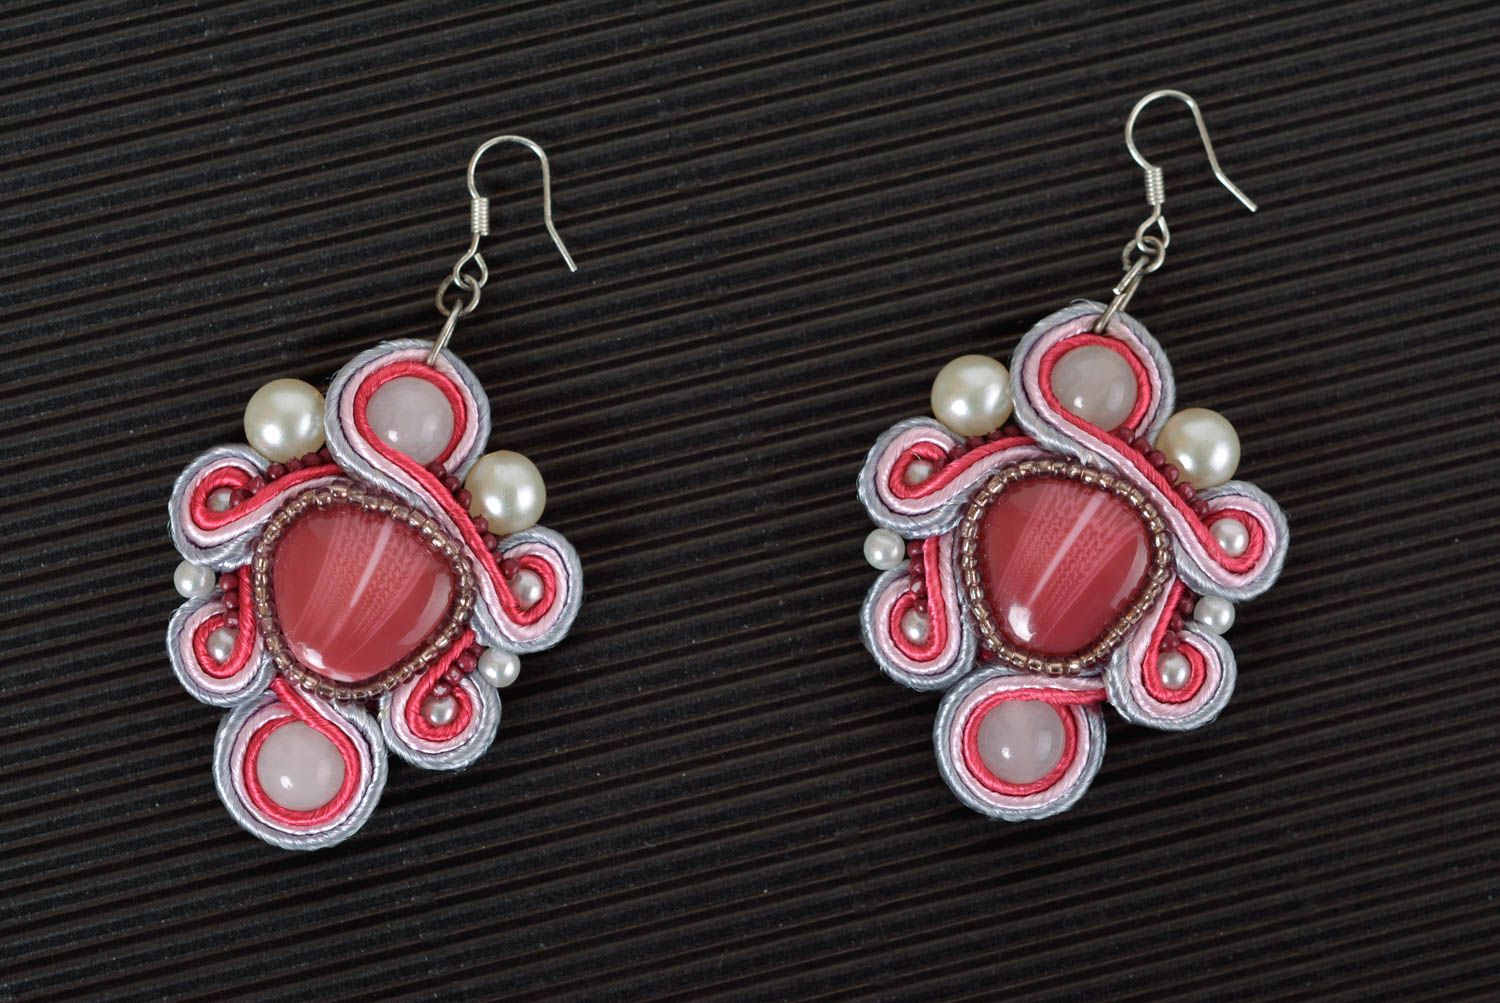 Handmade earrings soutache earrings soutache jewelry with natural stones photo 1